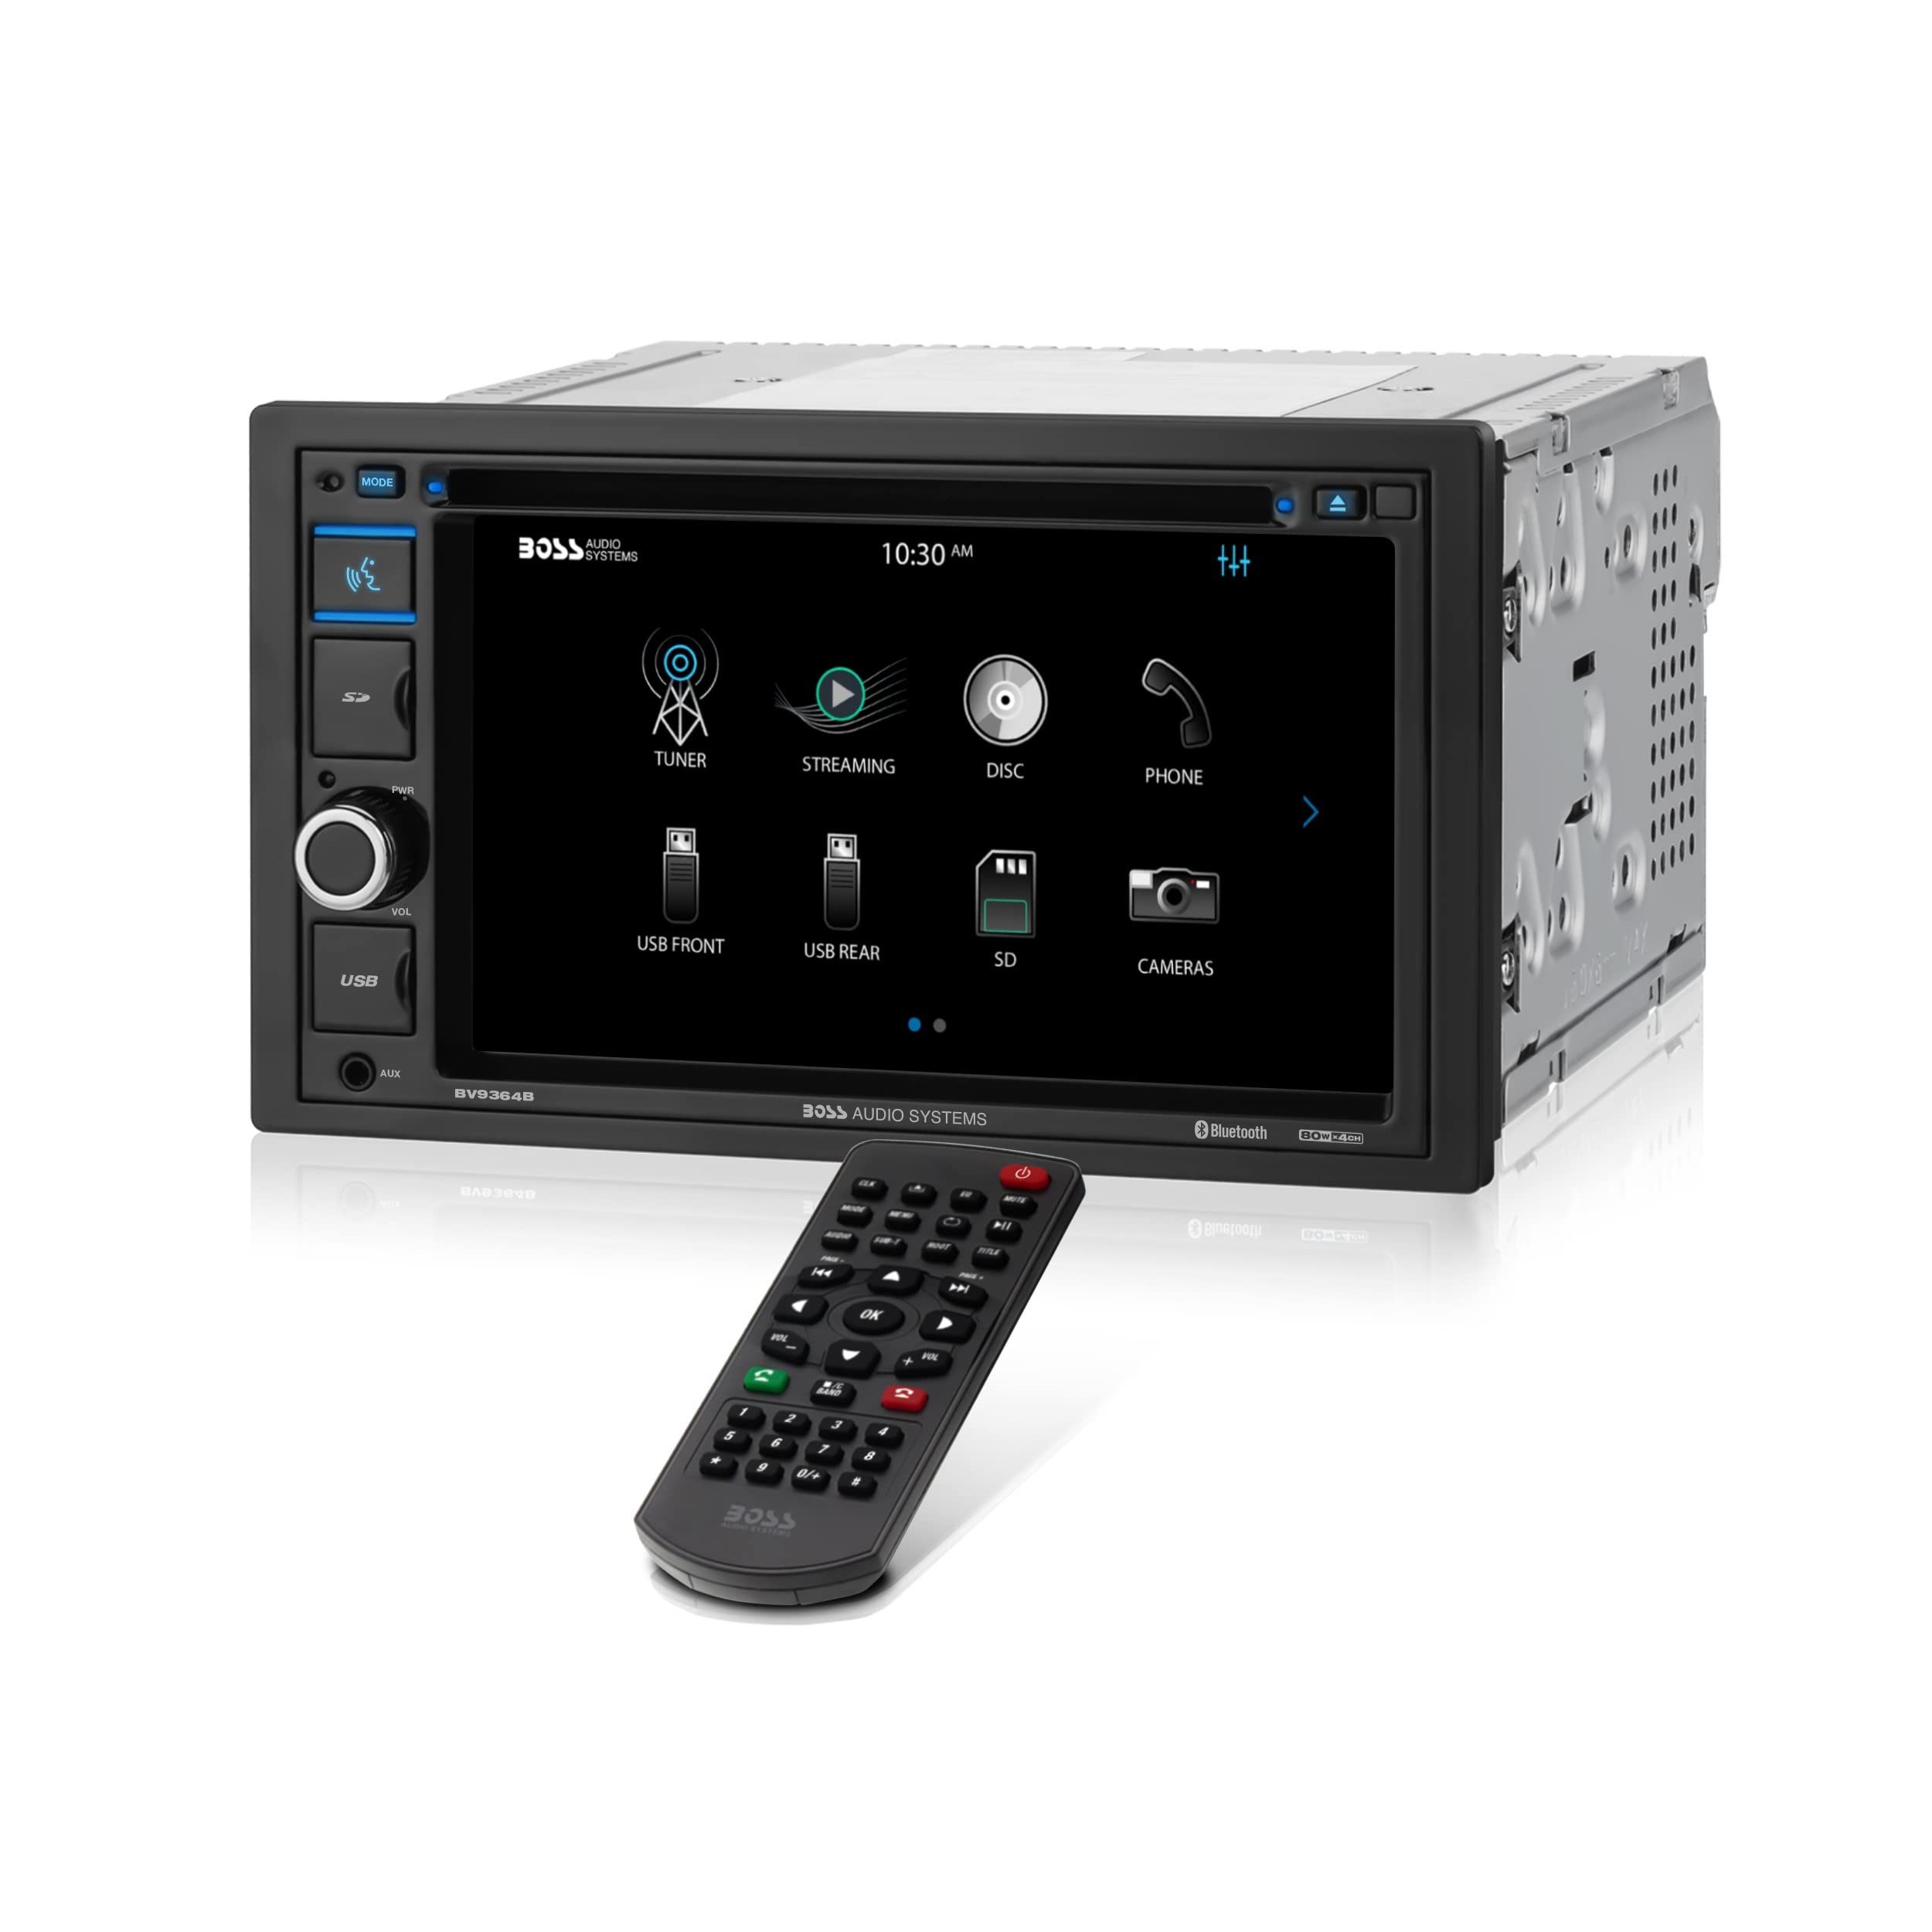  BOSS Audio Systems 系统 BV9364B 汽车立体声 DVD 播放器 - 双 Din、蓝牙音频/免提通话、6.2 英寸触摸屏液晶显示器、MP3 播放器、CD、DVD、USB 端口、SD、AUX 输入、AM/FM...